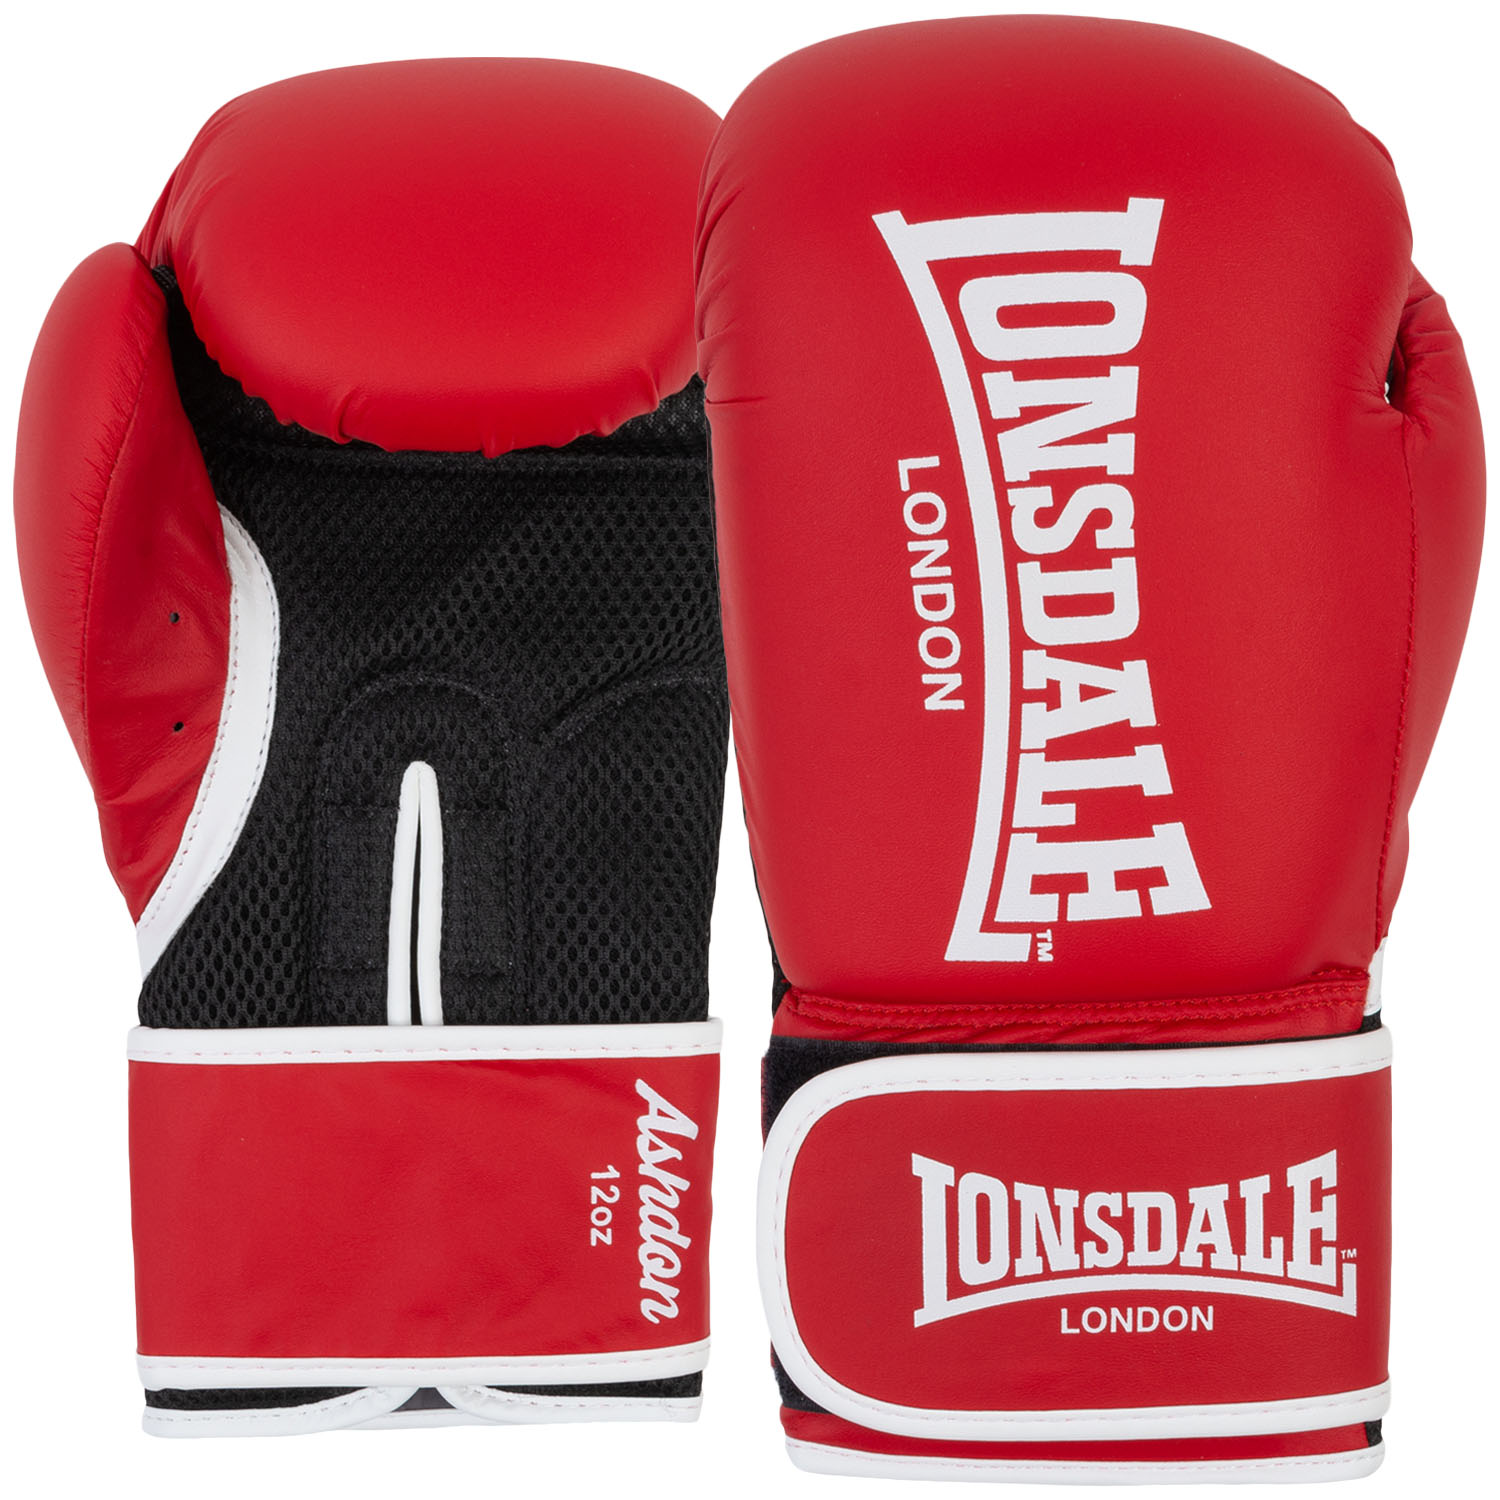 Lonsdale Boxhandschuhe, Ashdon, rot-weiß, 12 Oz